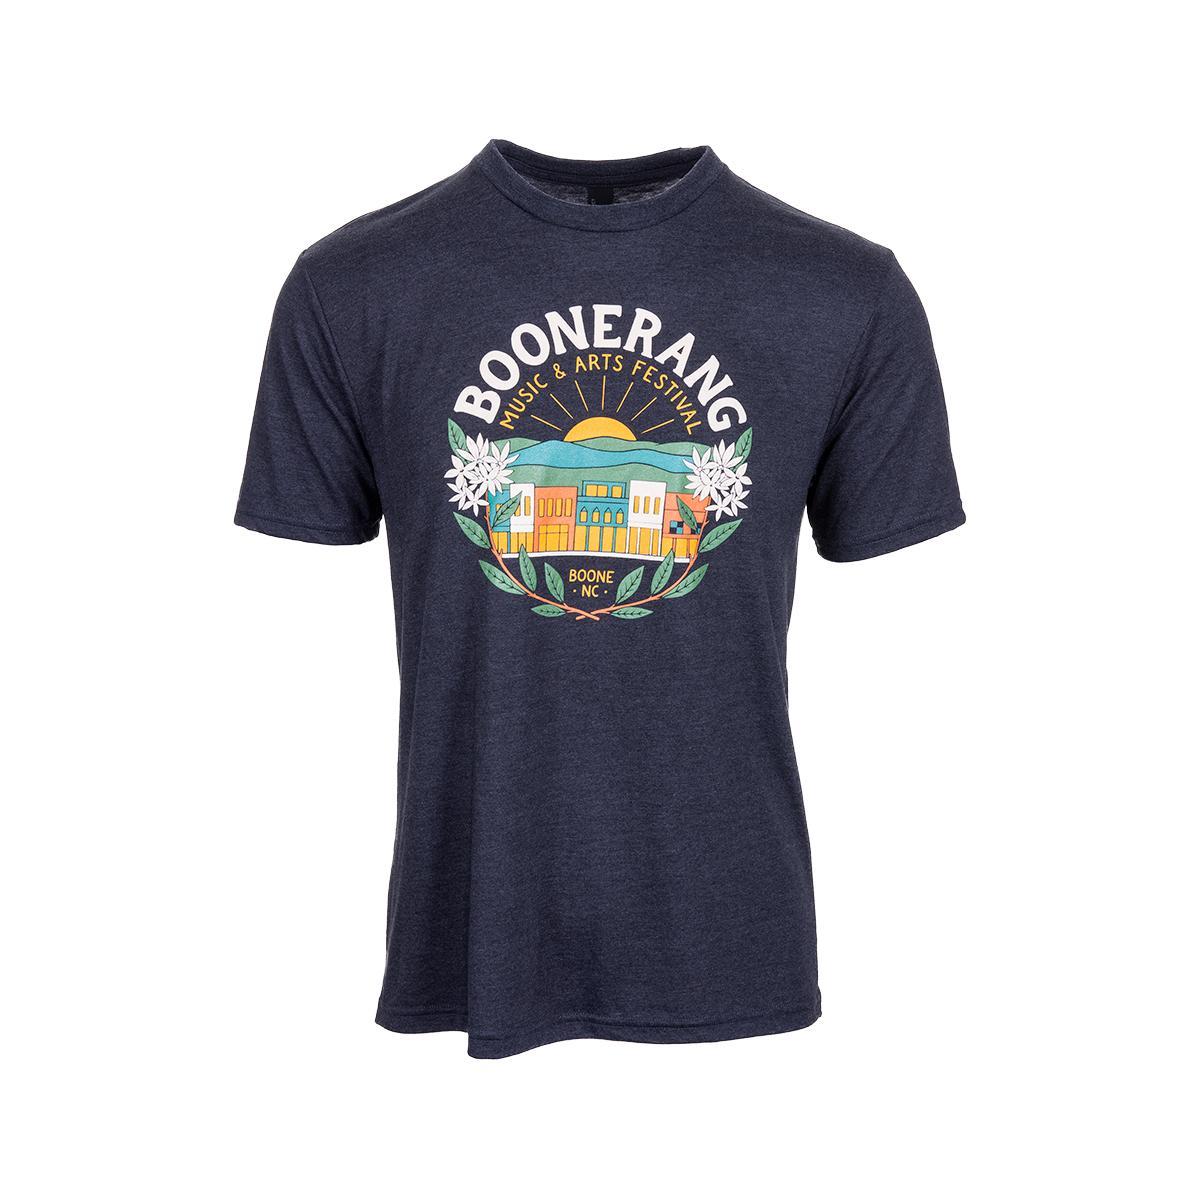 Boonerang Multi-Color Short Sleeve T-Shirt